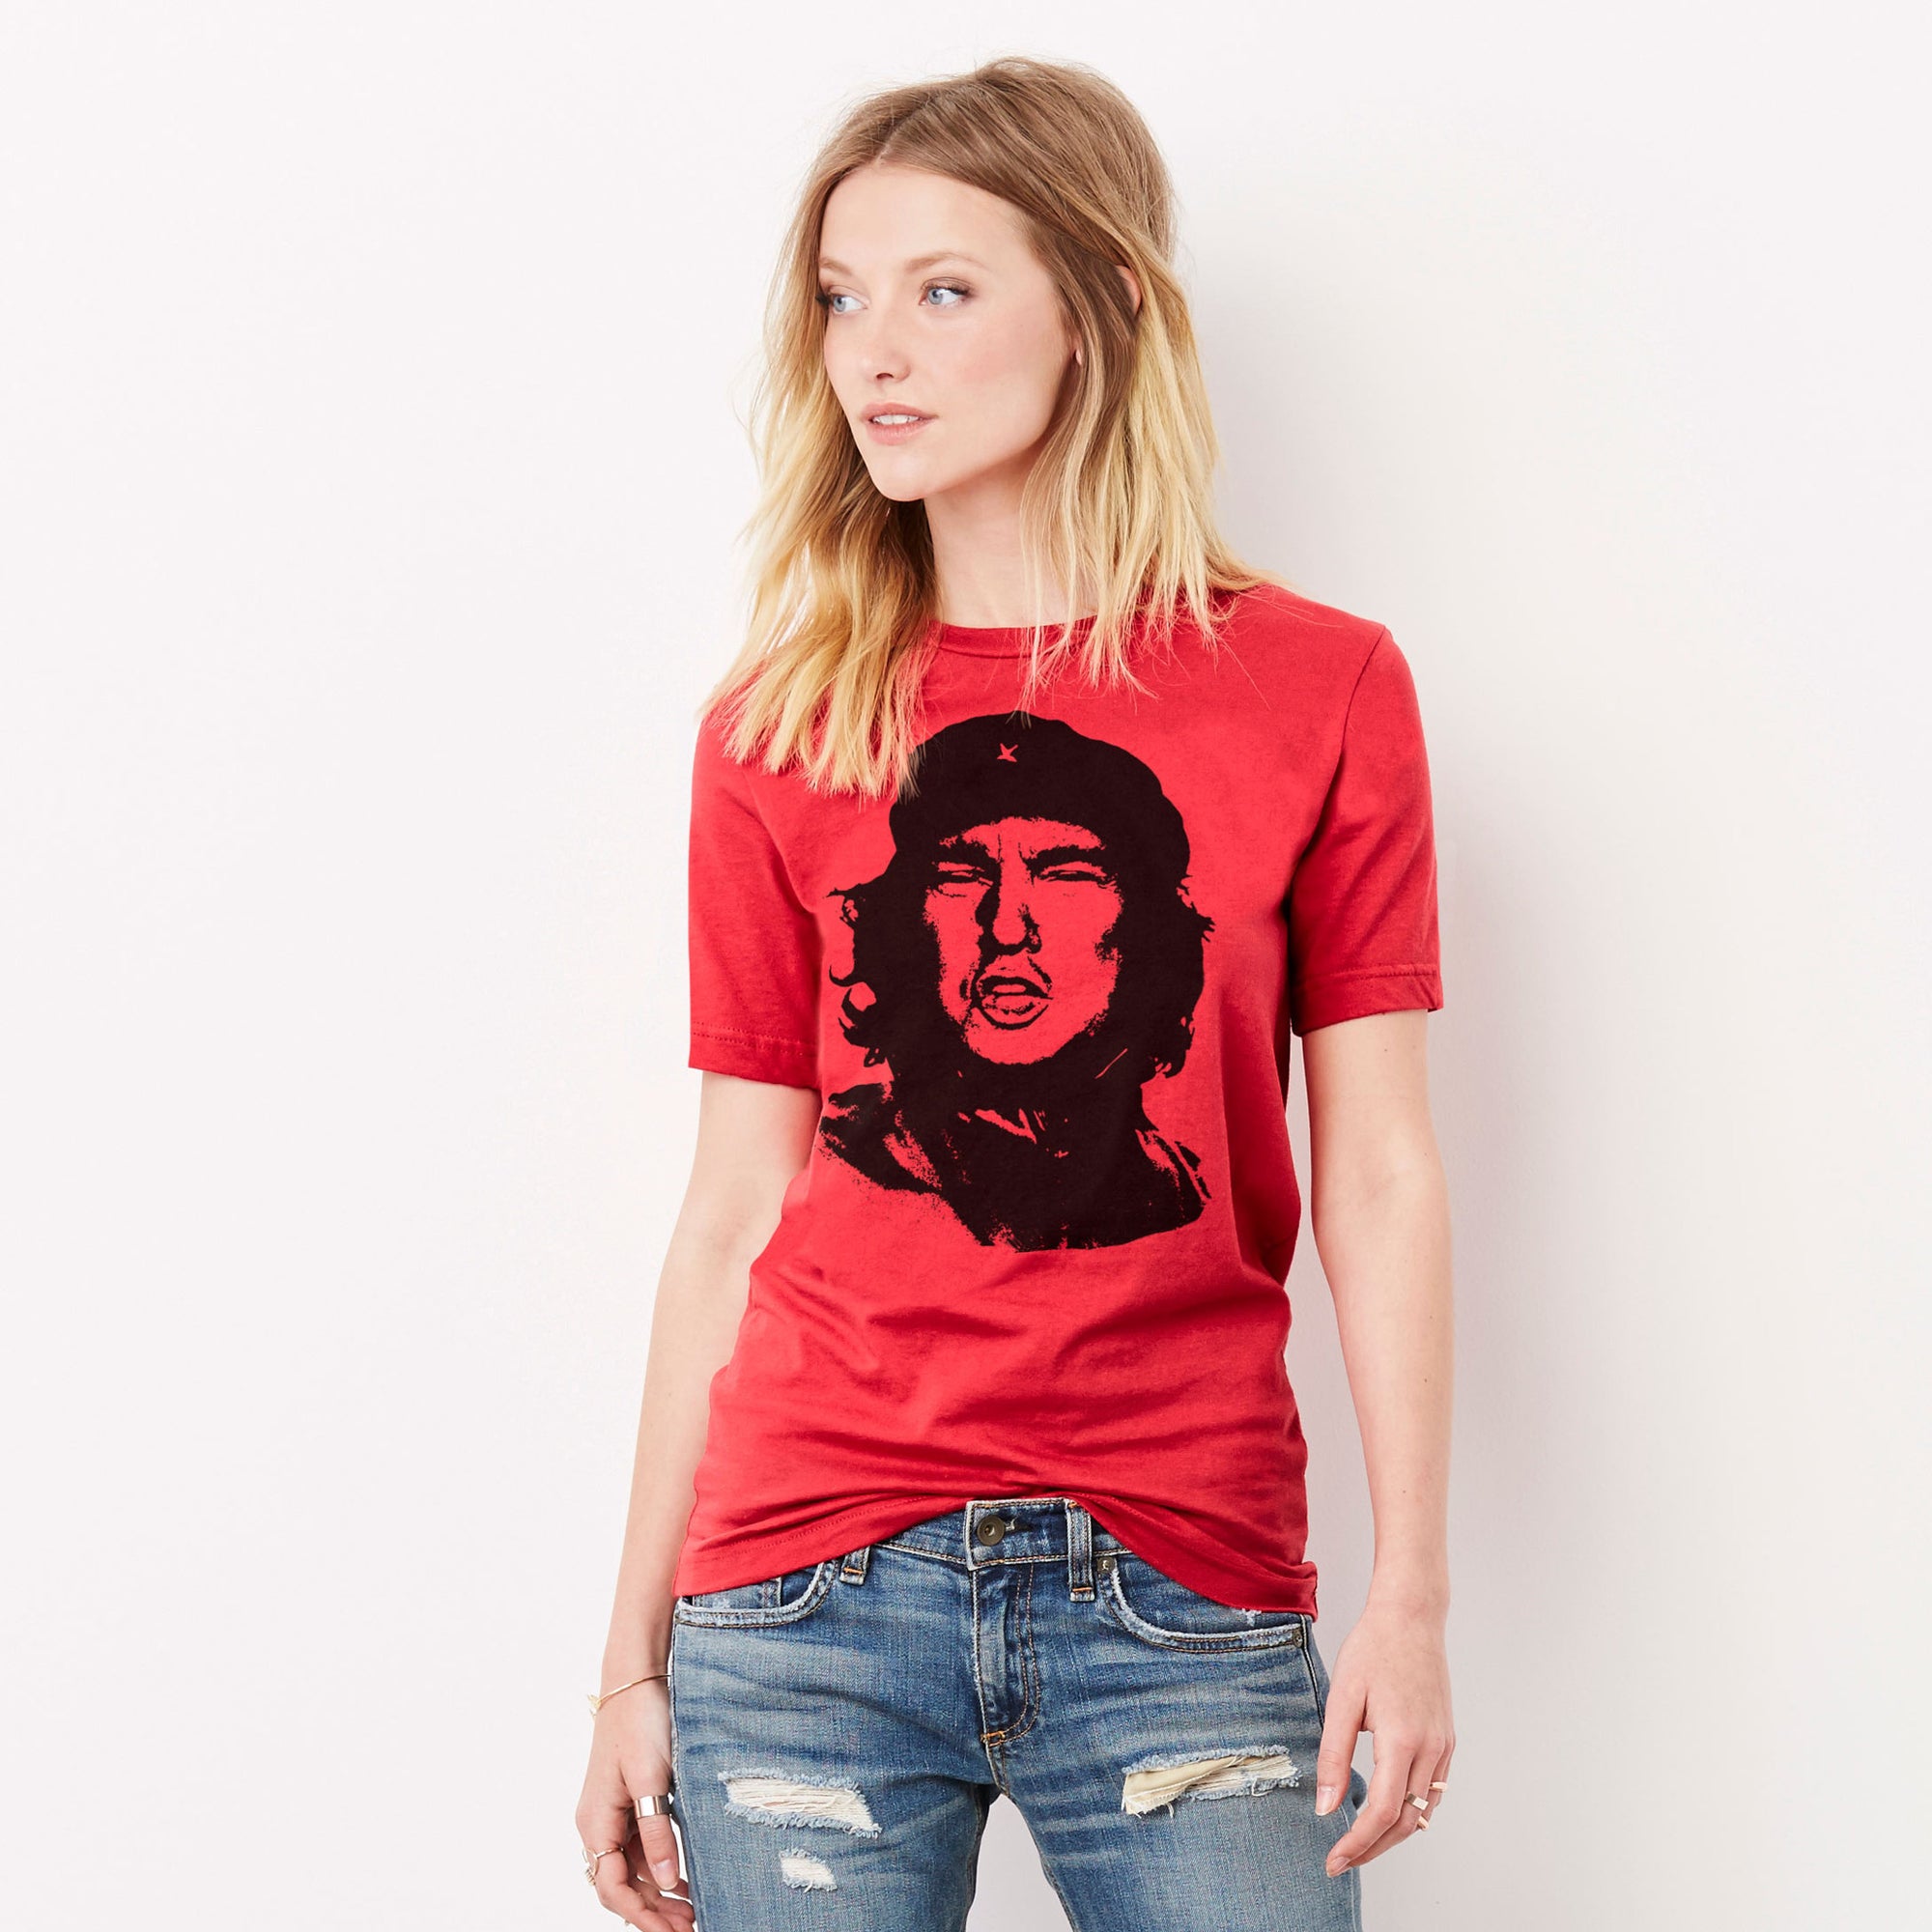 Trump Stuff |  Funny Donald Trump Shirts and Gifts